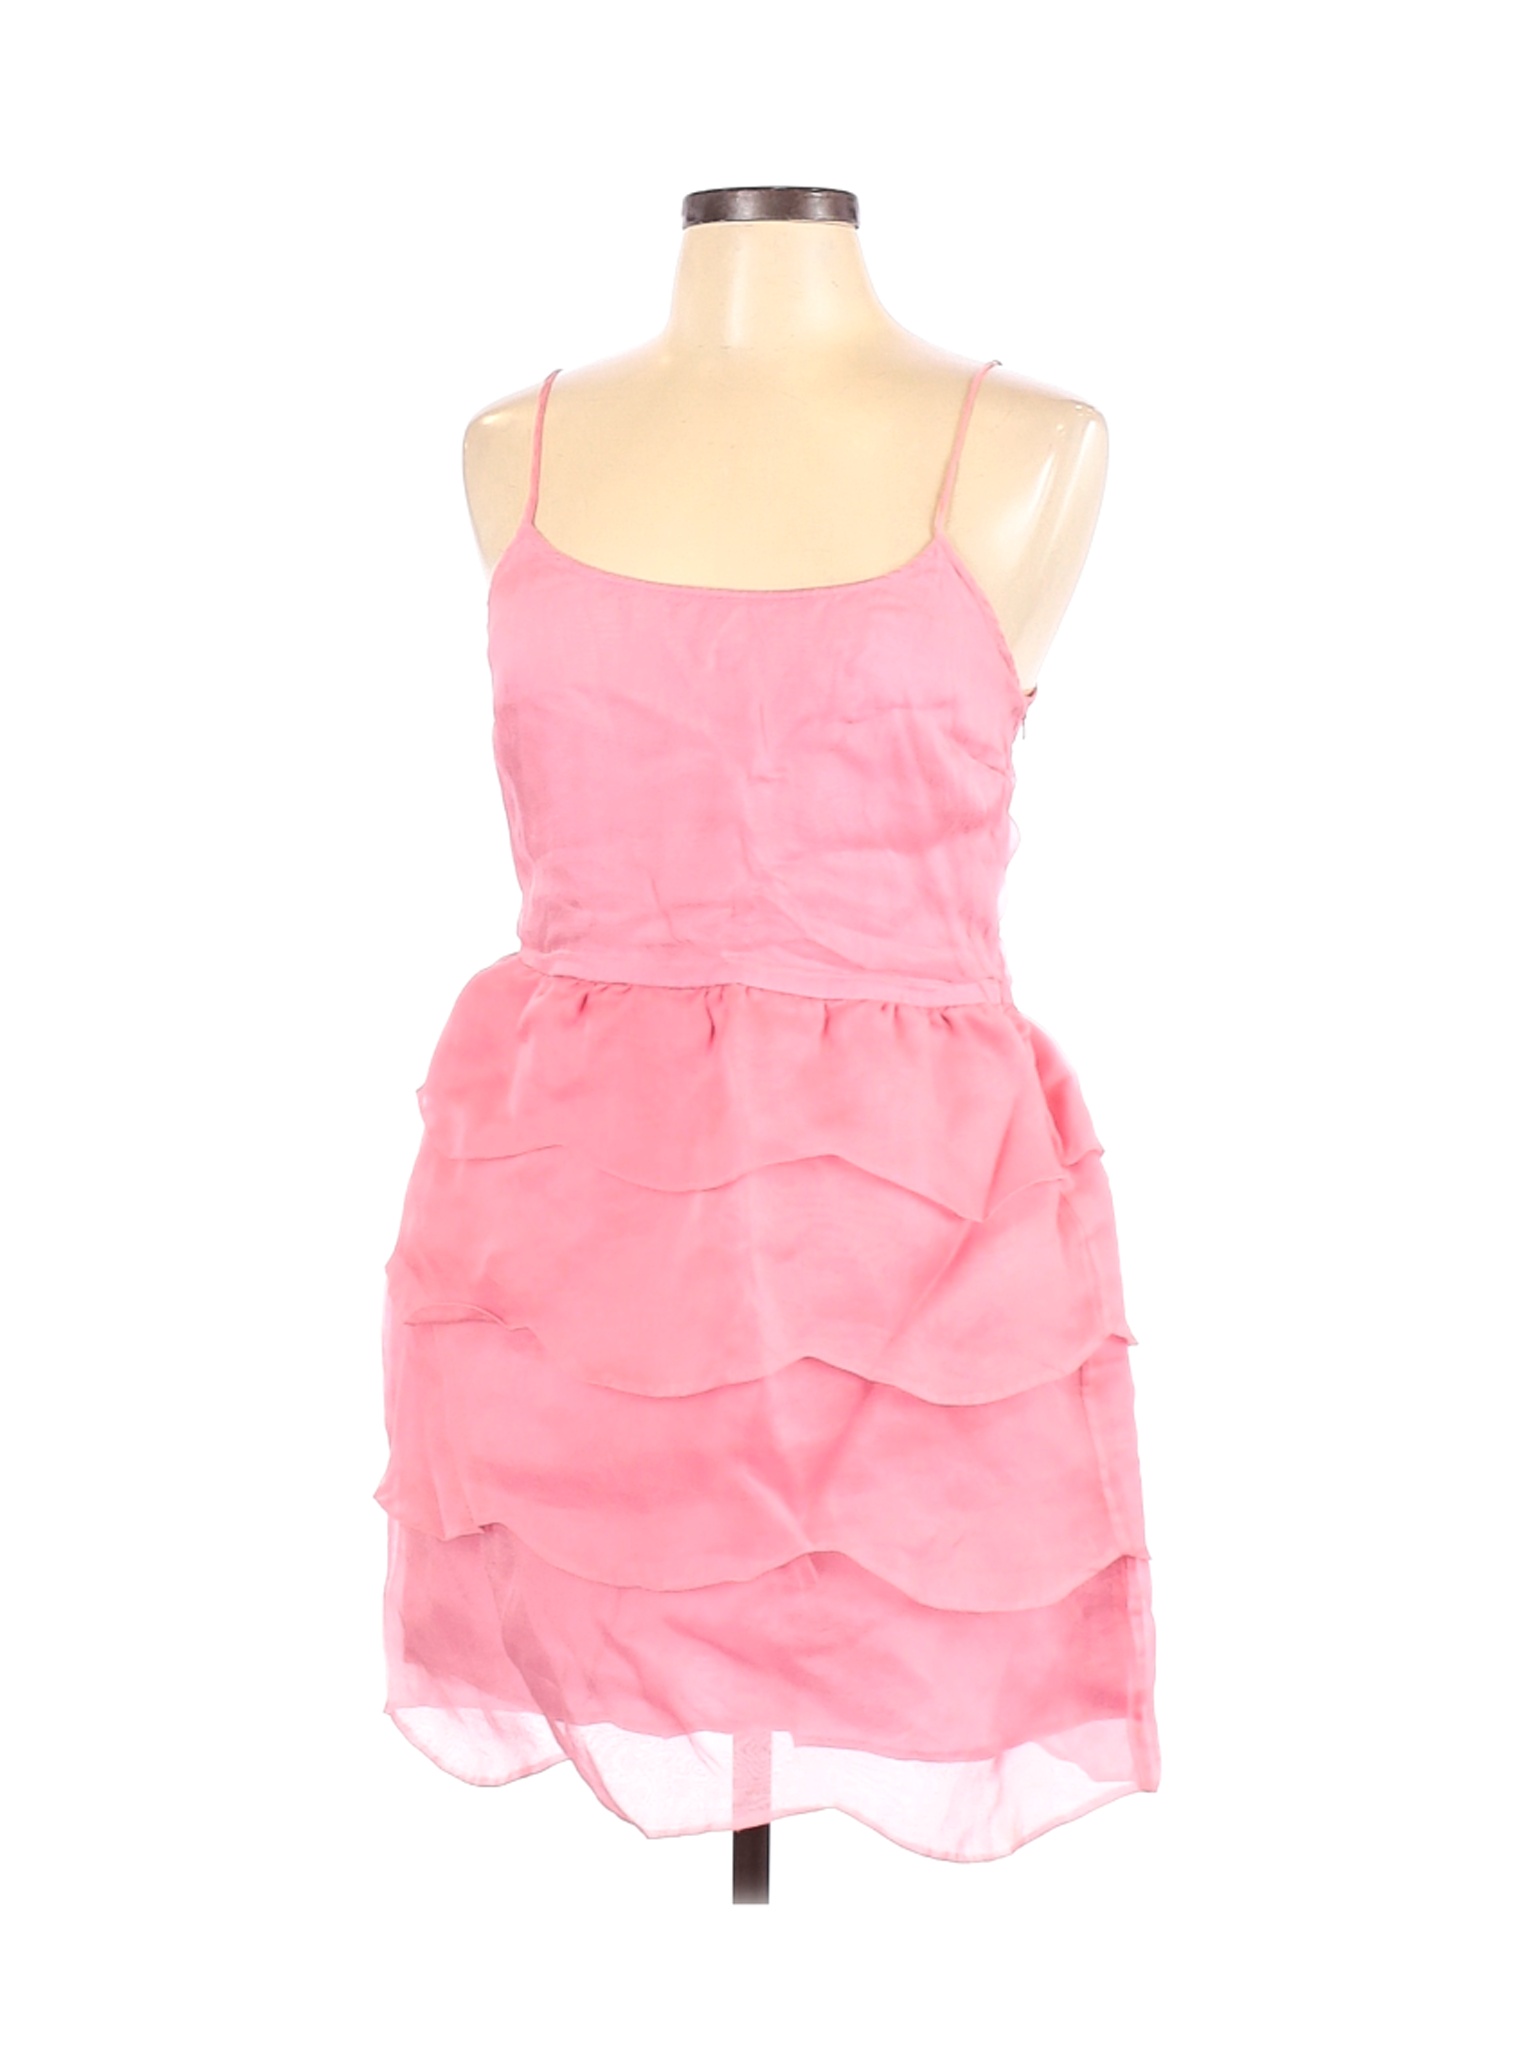 Topshop Women Pink Cocktail Dress 10 | eBay